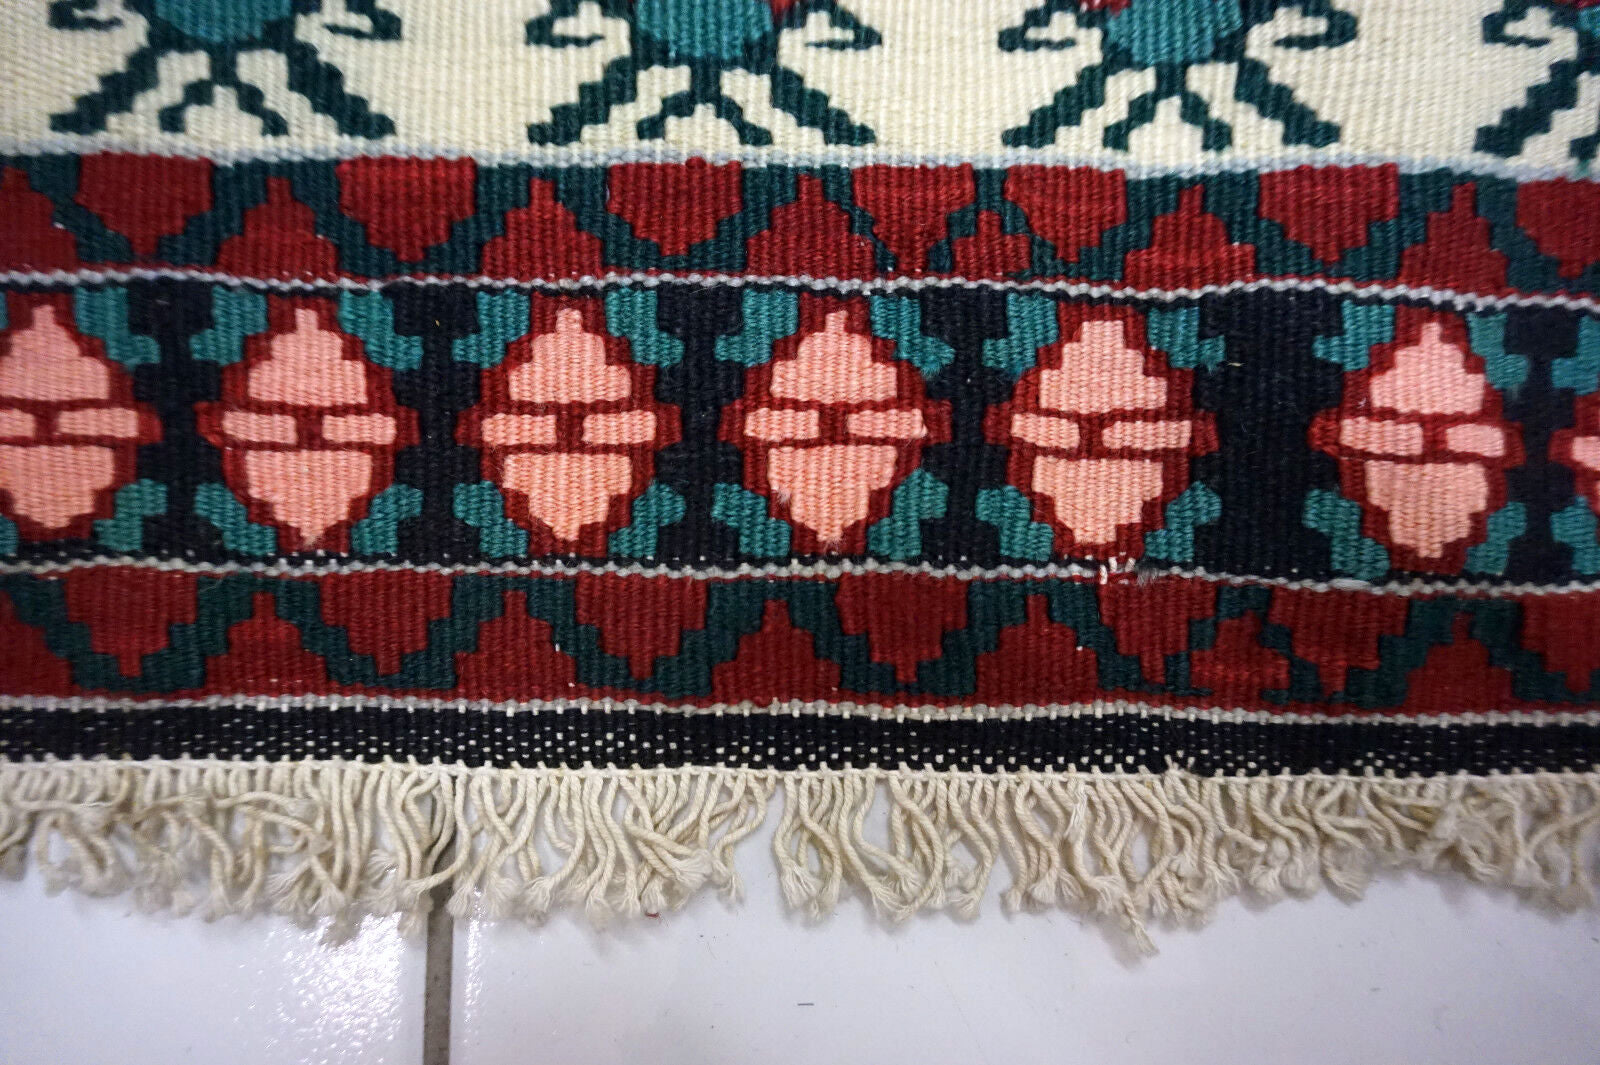 Elegant handmade rug with traditional Middle Eastern design elements